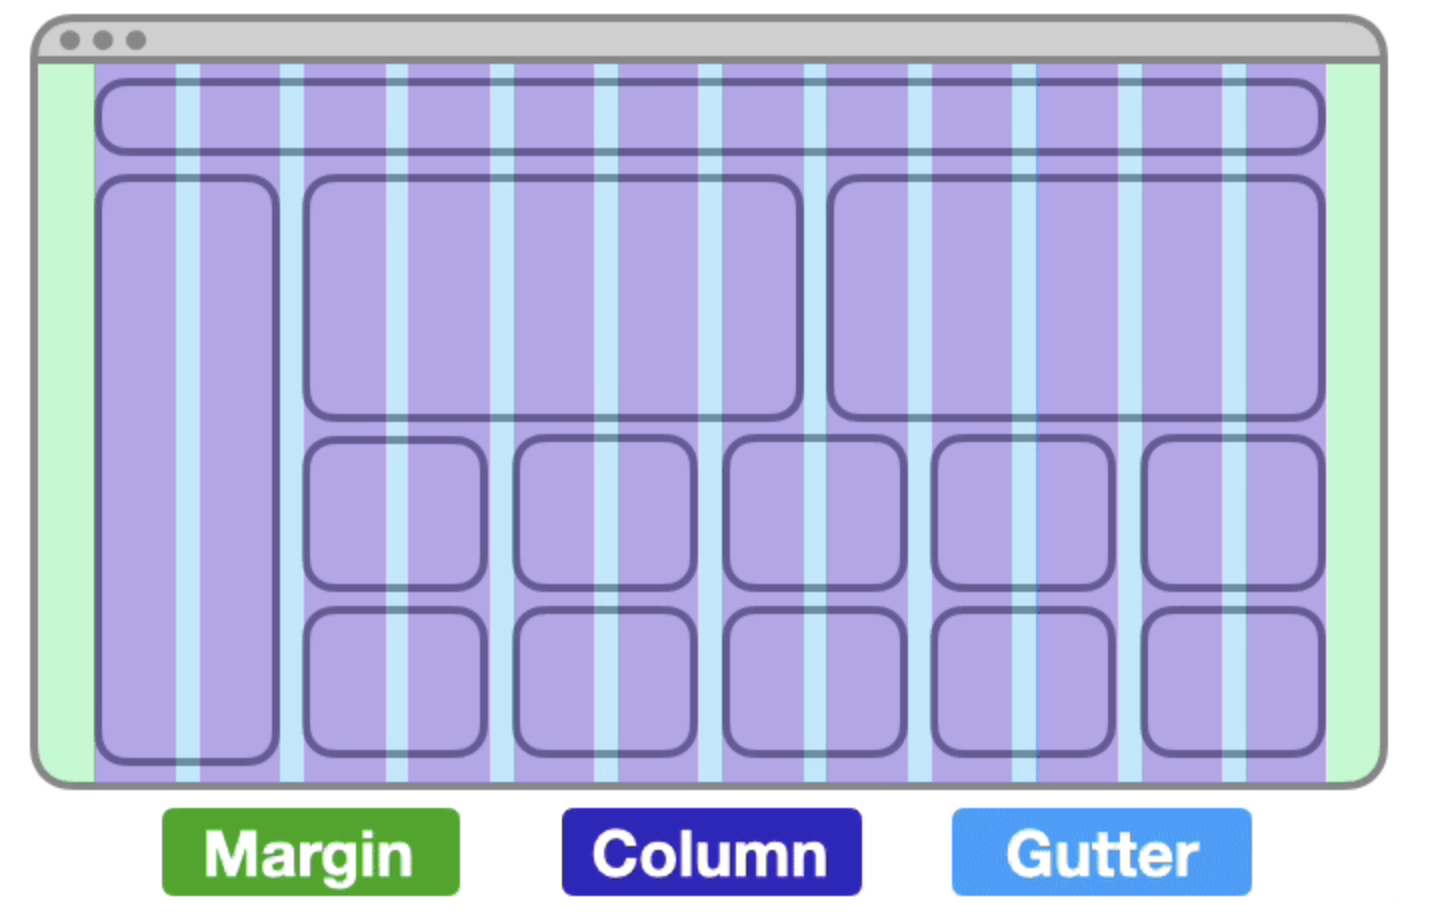 column grid system